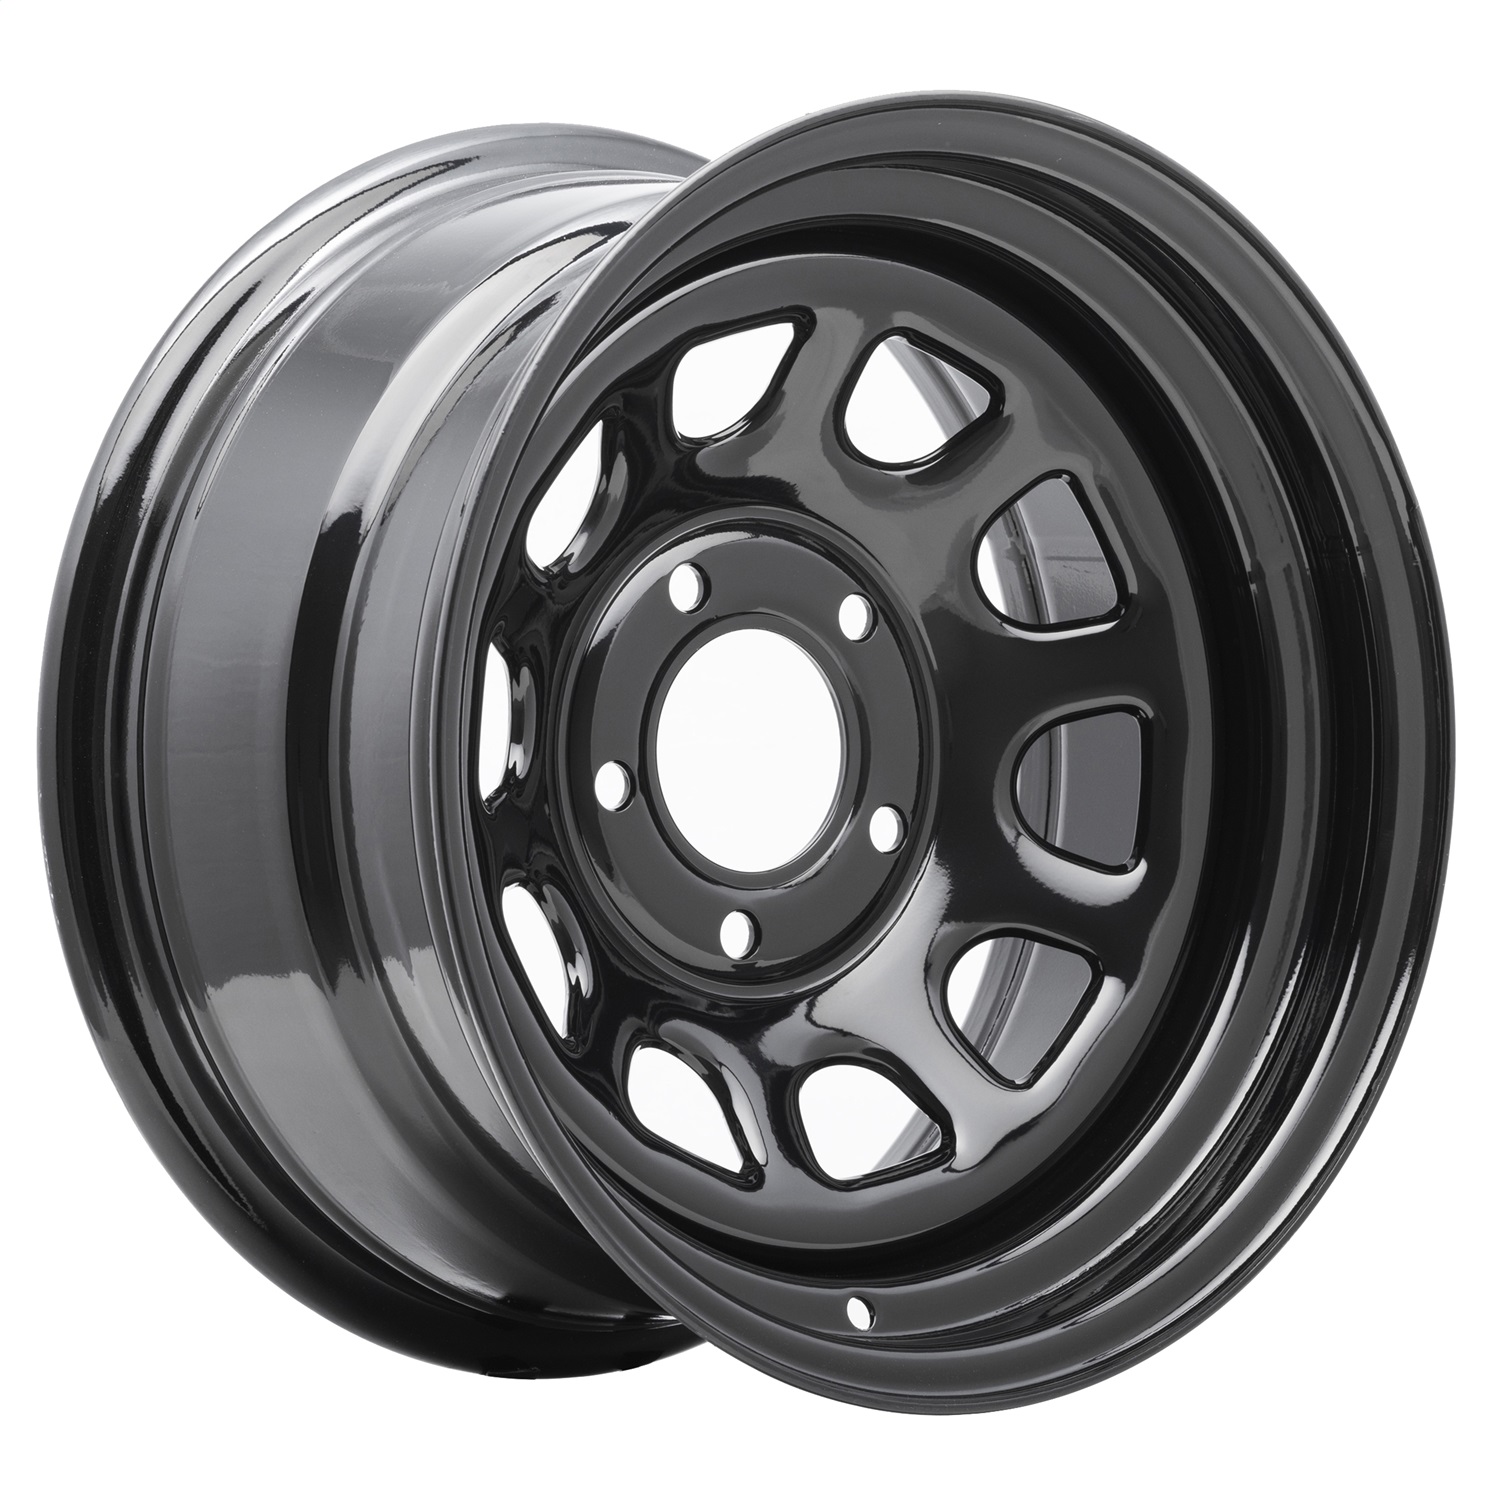 Pro Comp Wheels 51-5865 Rock Crawler Series 51 Black Wheel